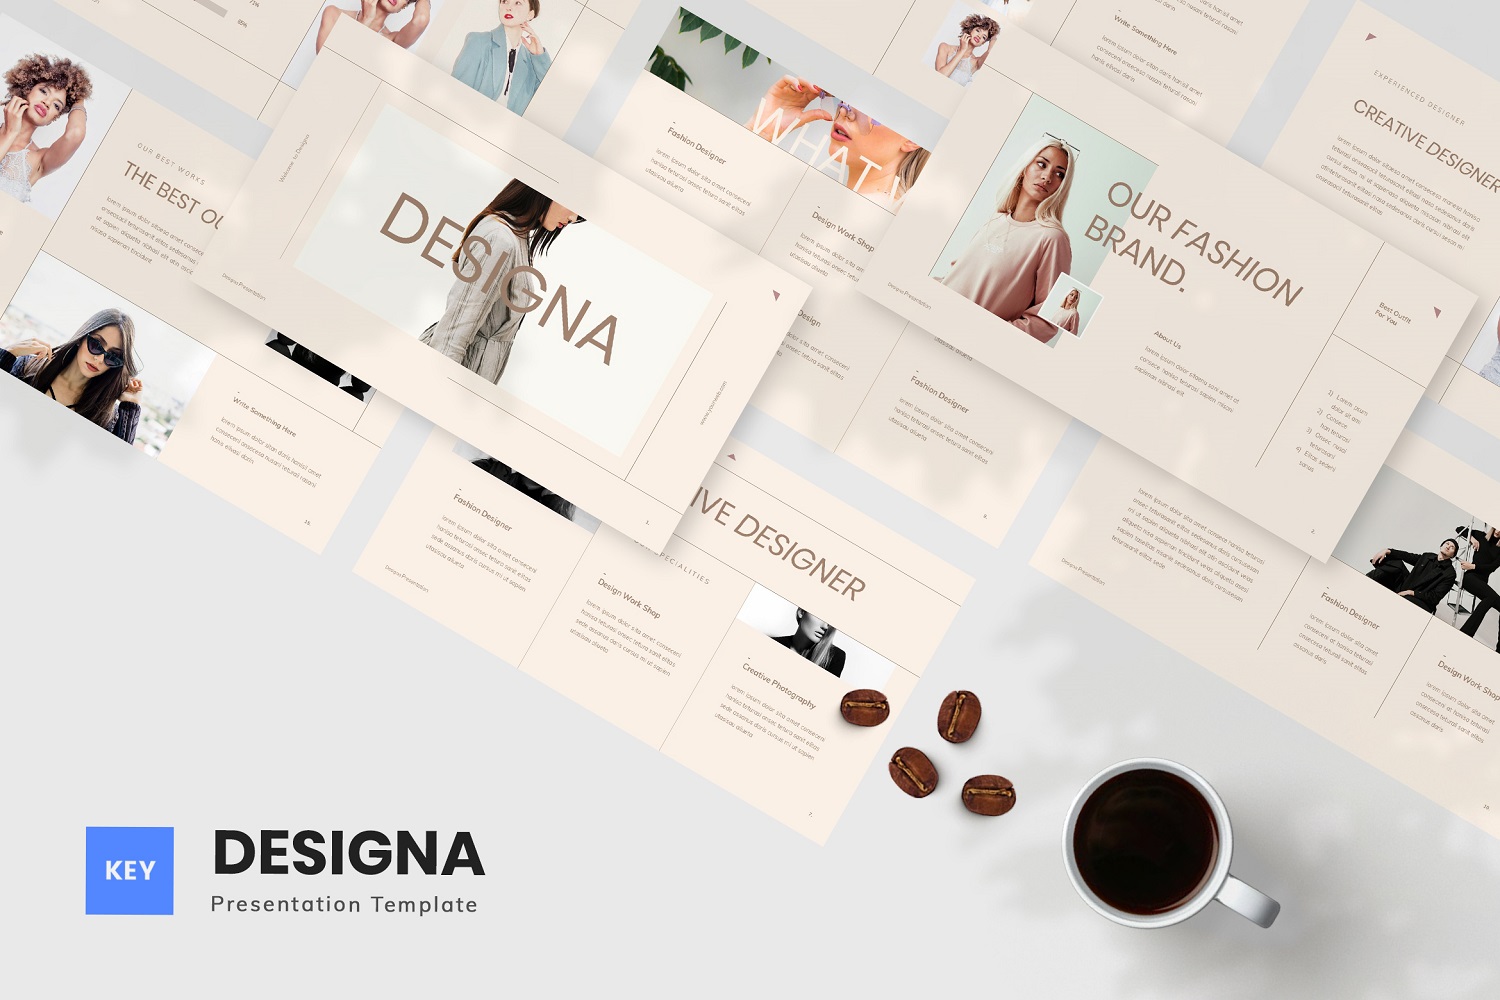 Designa - Fashion Keynote Template